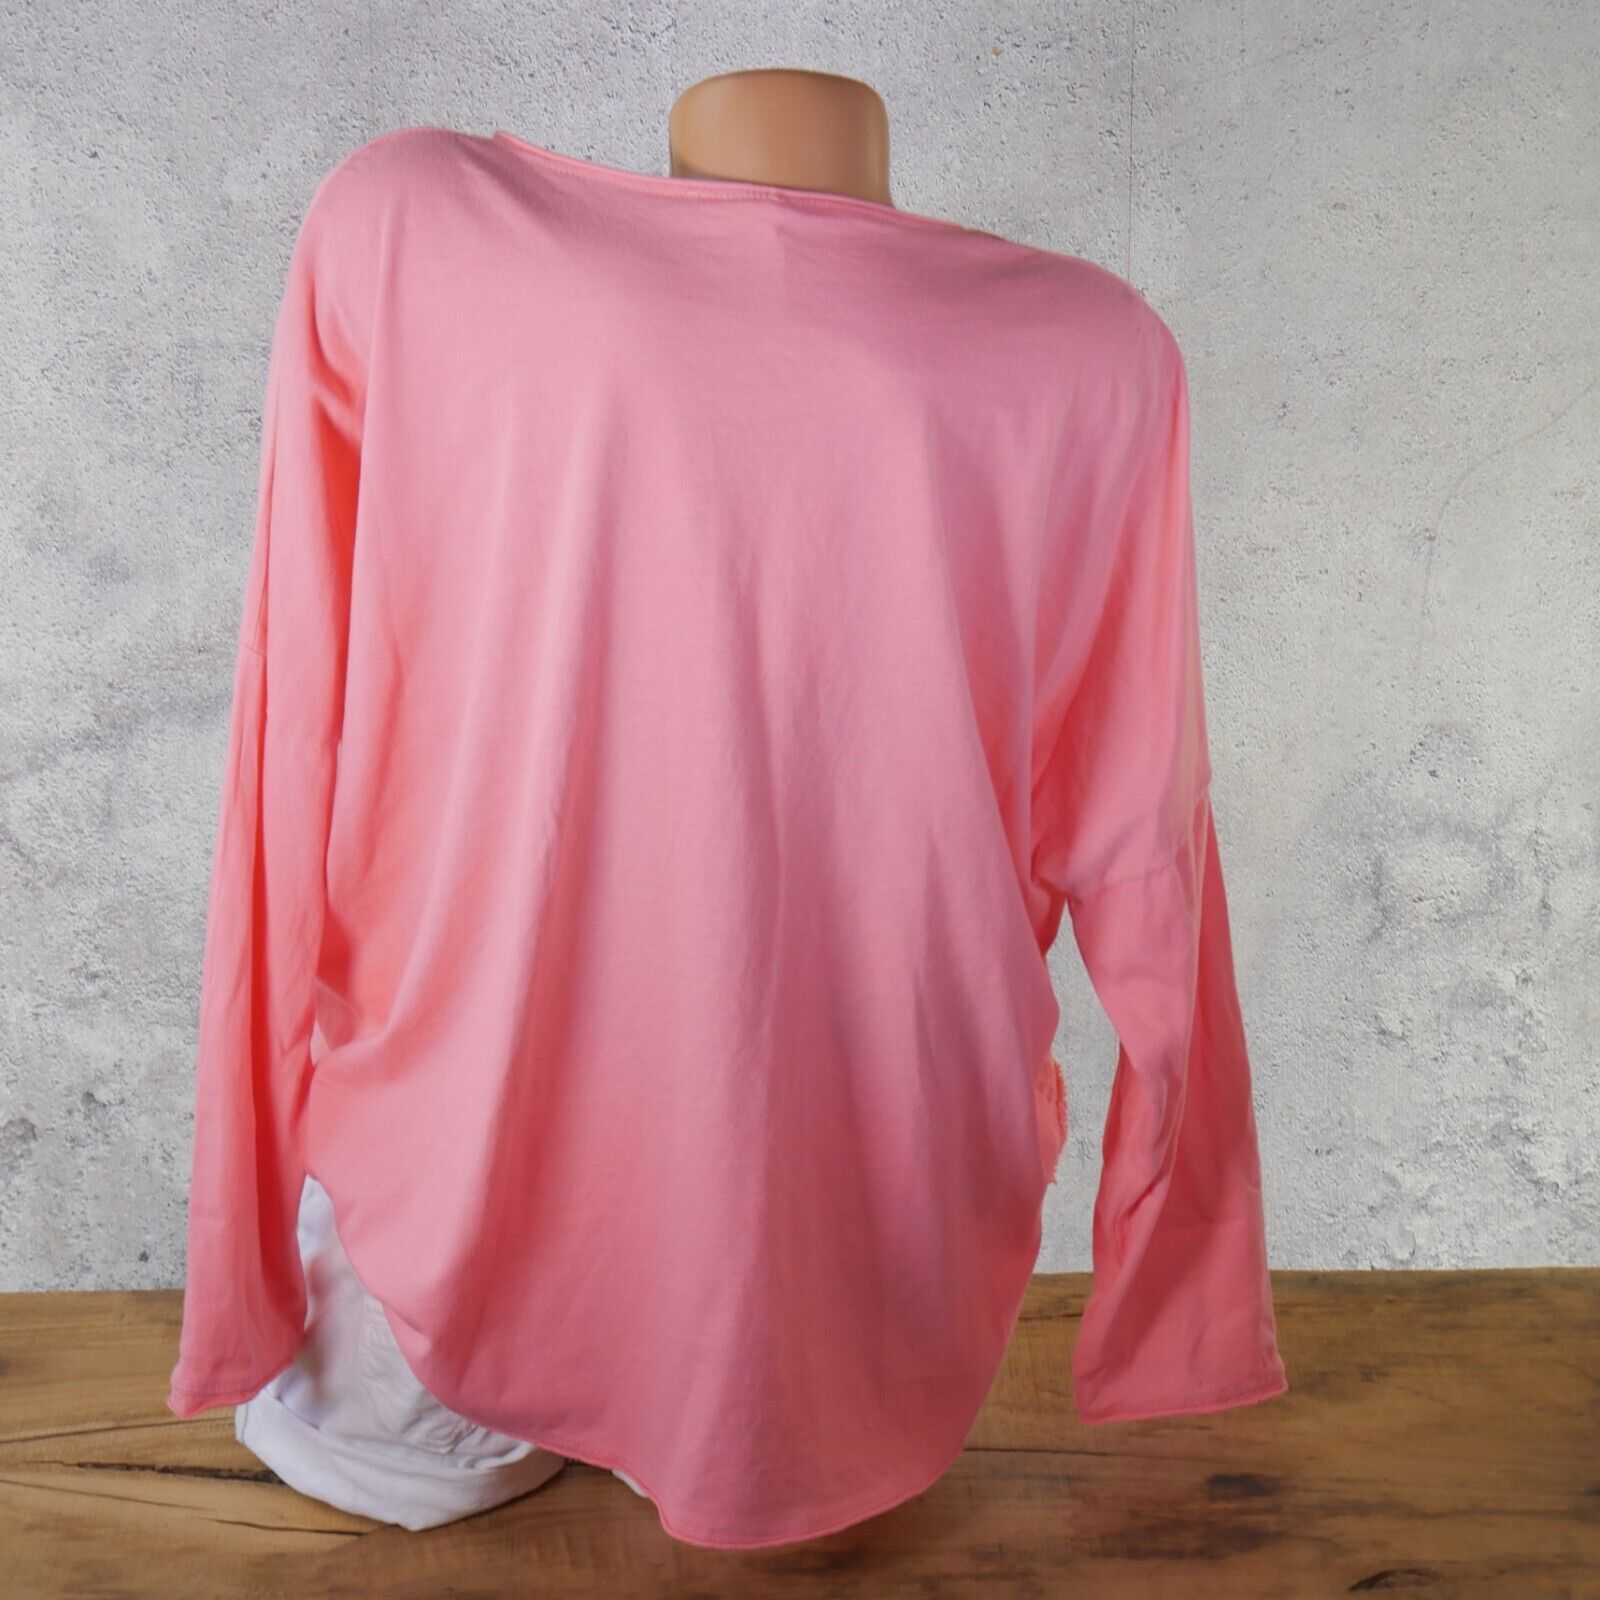  Luftige Bluse Blumen Tunika Blusenshirt Italy Shirt One Size 38 40 42